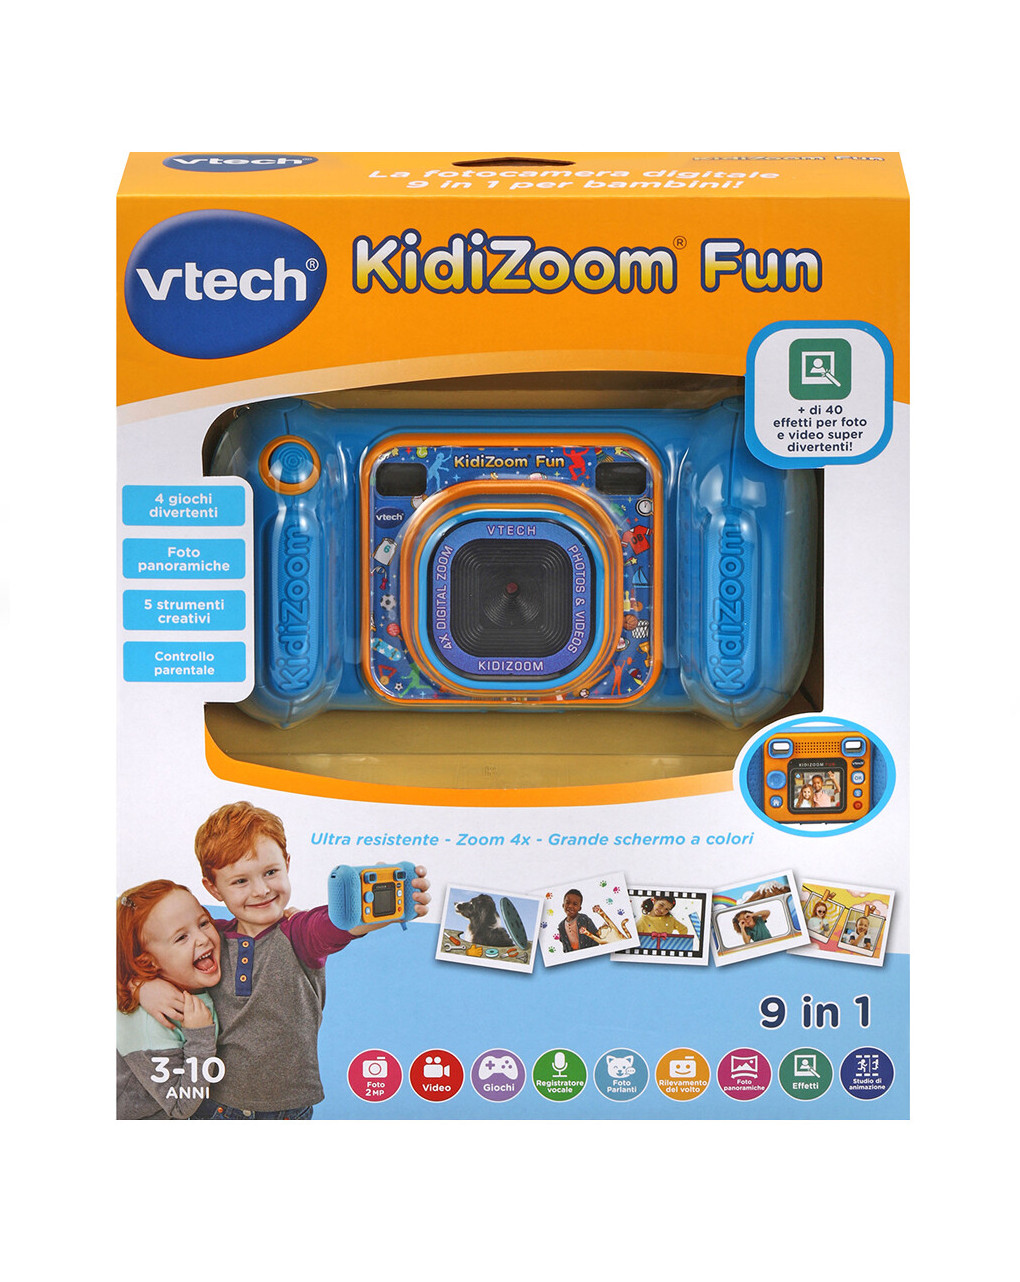 Kidizoom ® fun blu 3-10 anni - vtech - VTECH